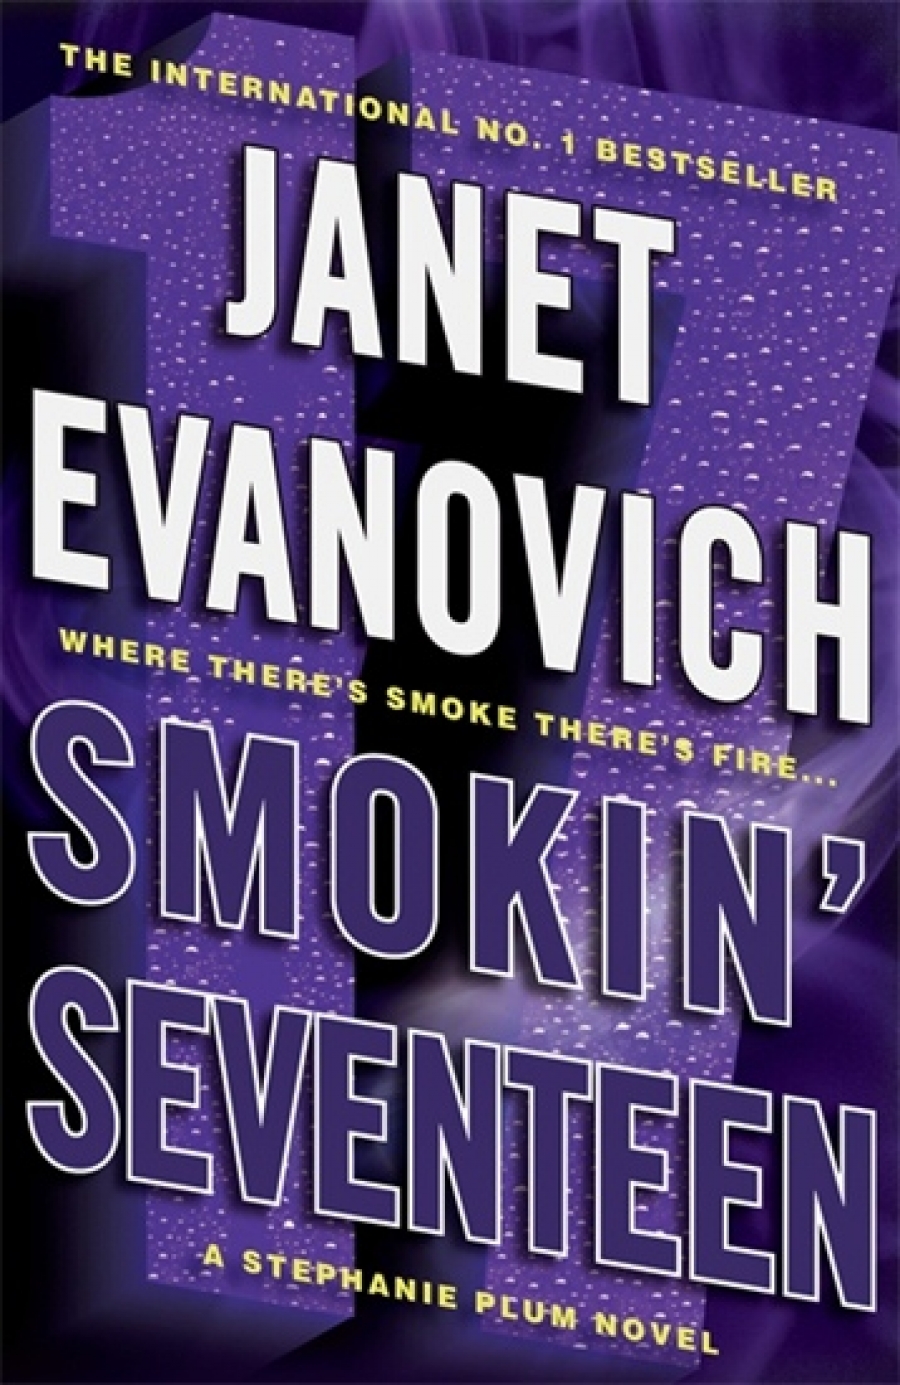 Janet, Evanovich Smokin' Seventeen  (Intern. bestseller) 